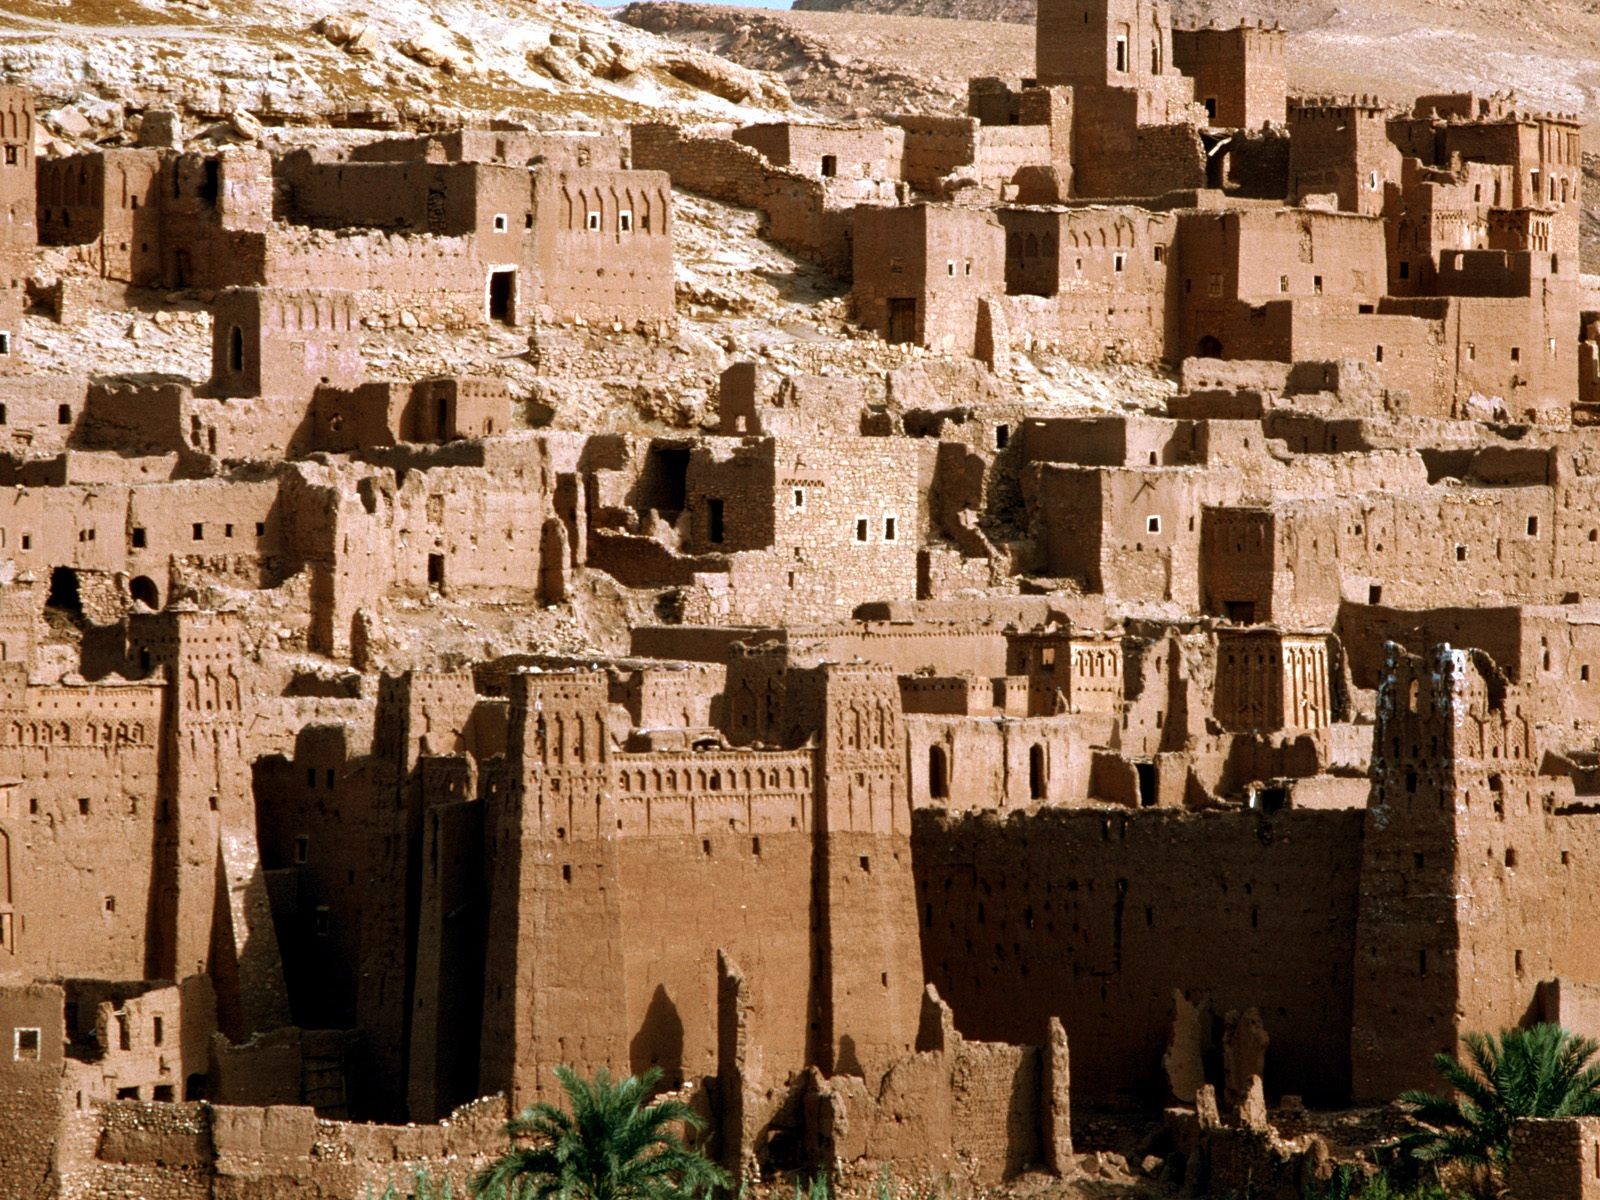 General 1600x1200 Morocco village fort ruins old building Aït-Ben-Haddou